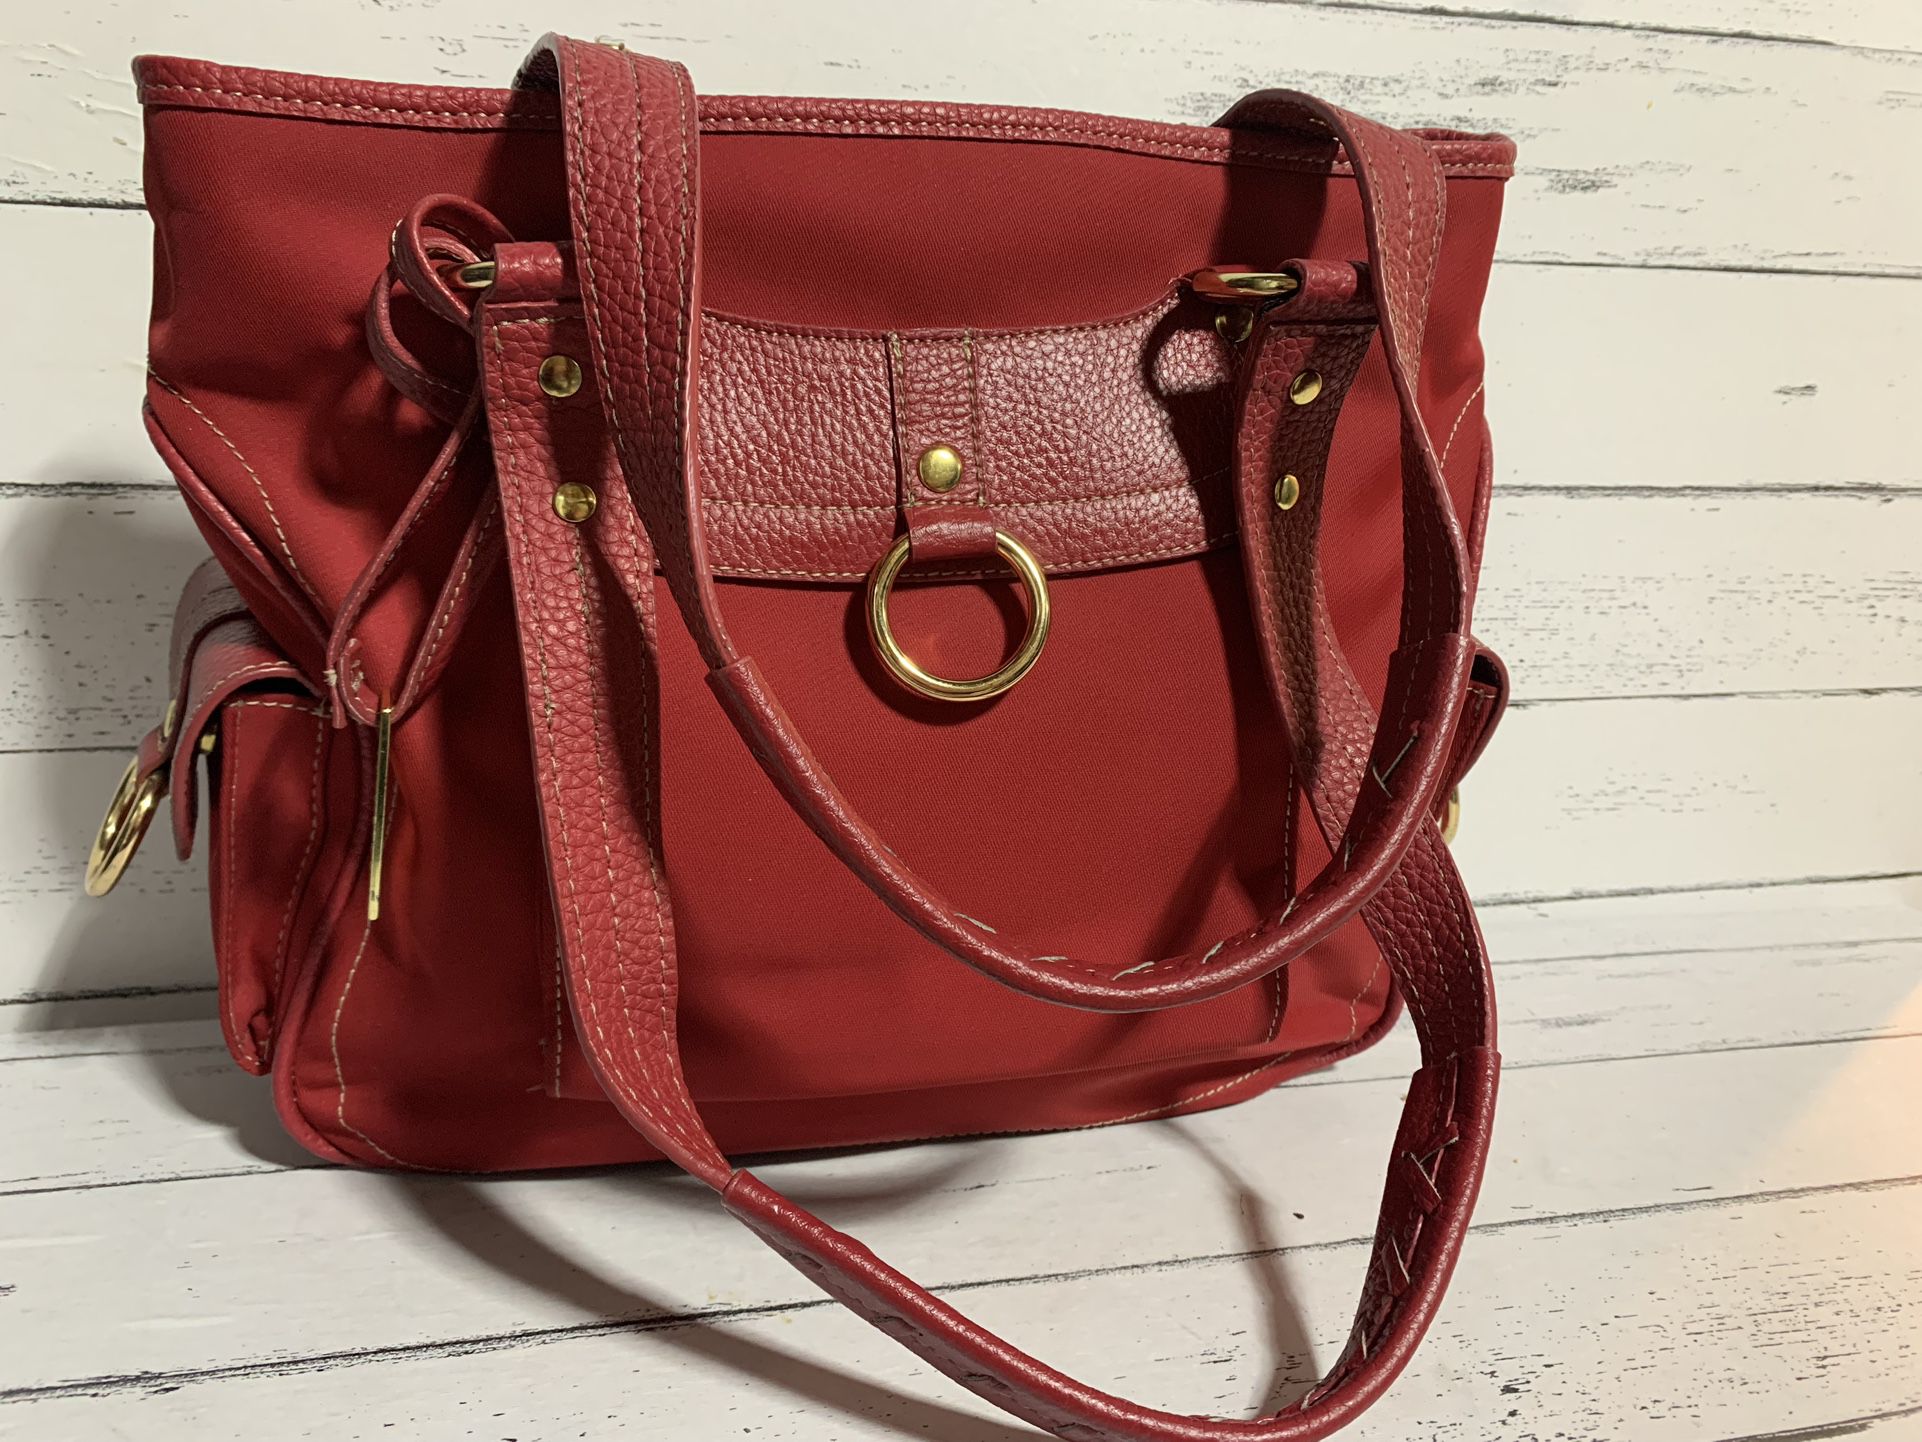 Maxx New York red shoulder bag tote purse